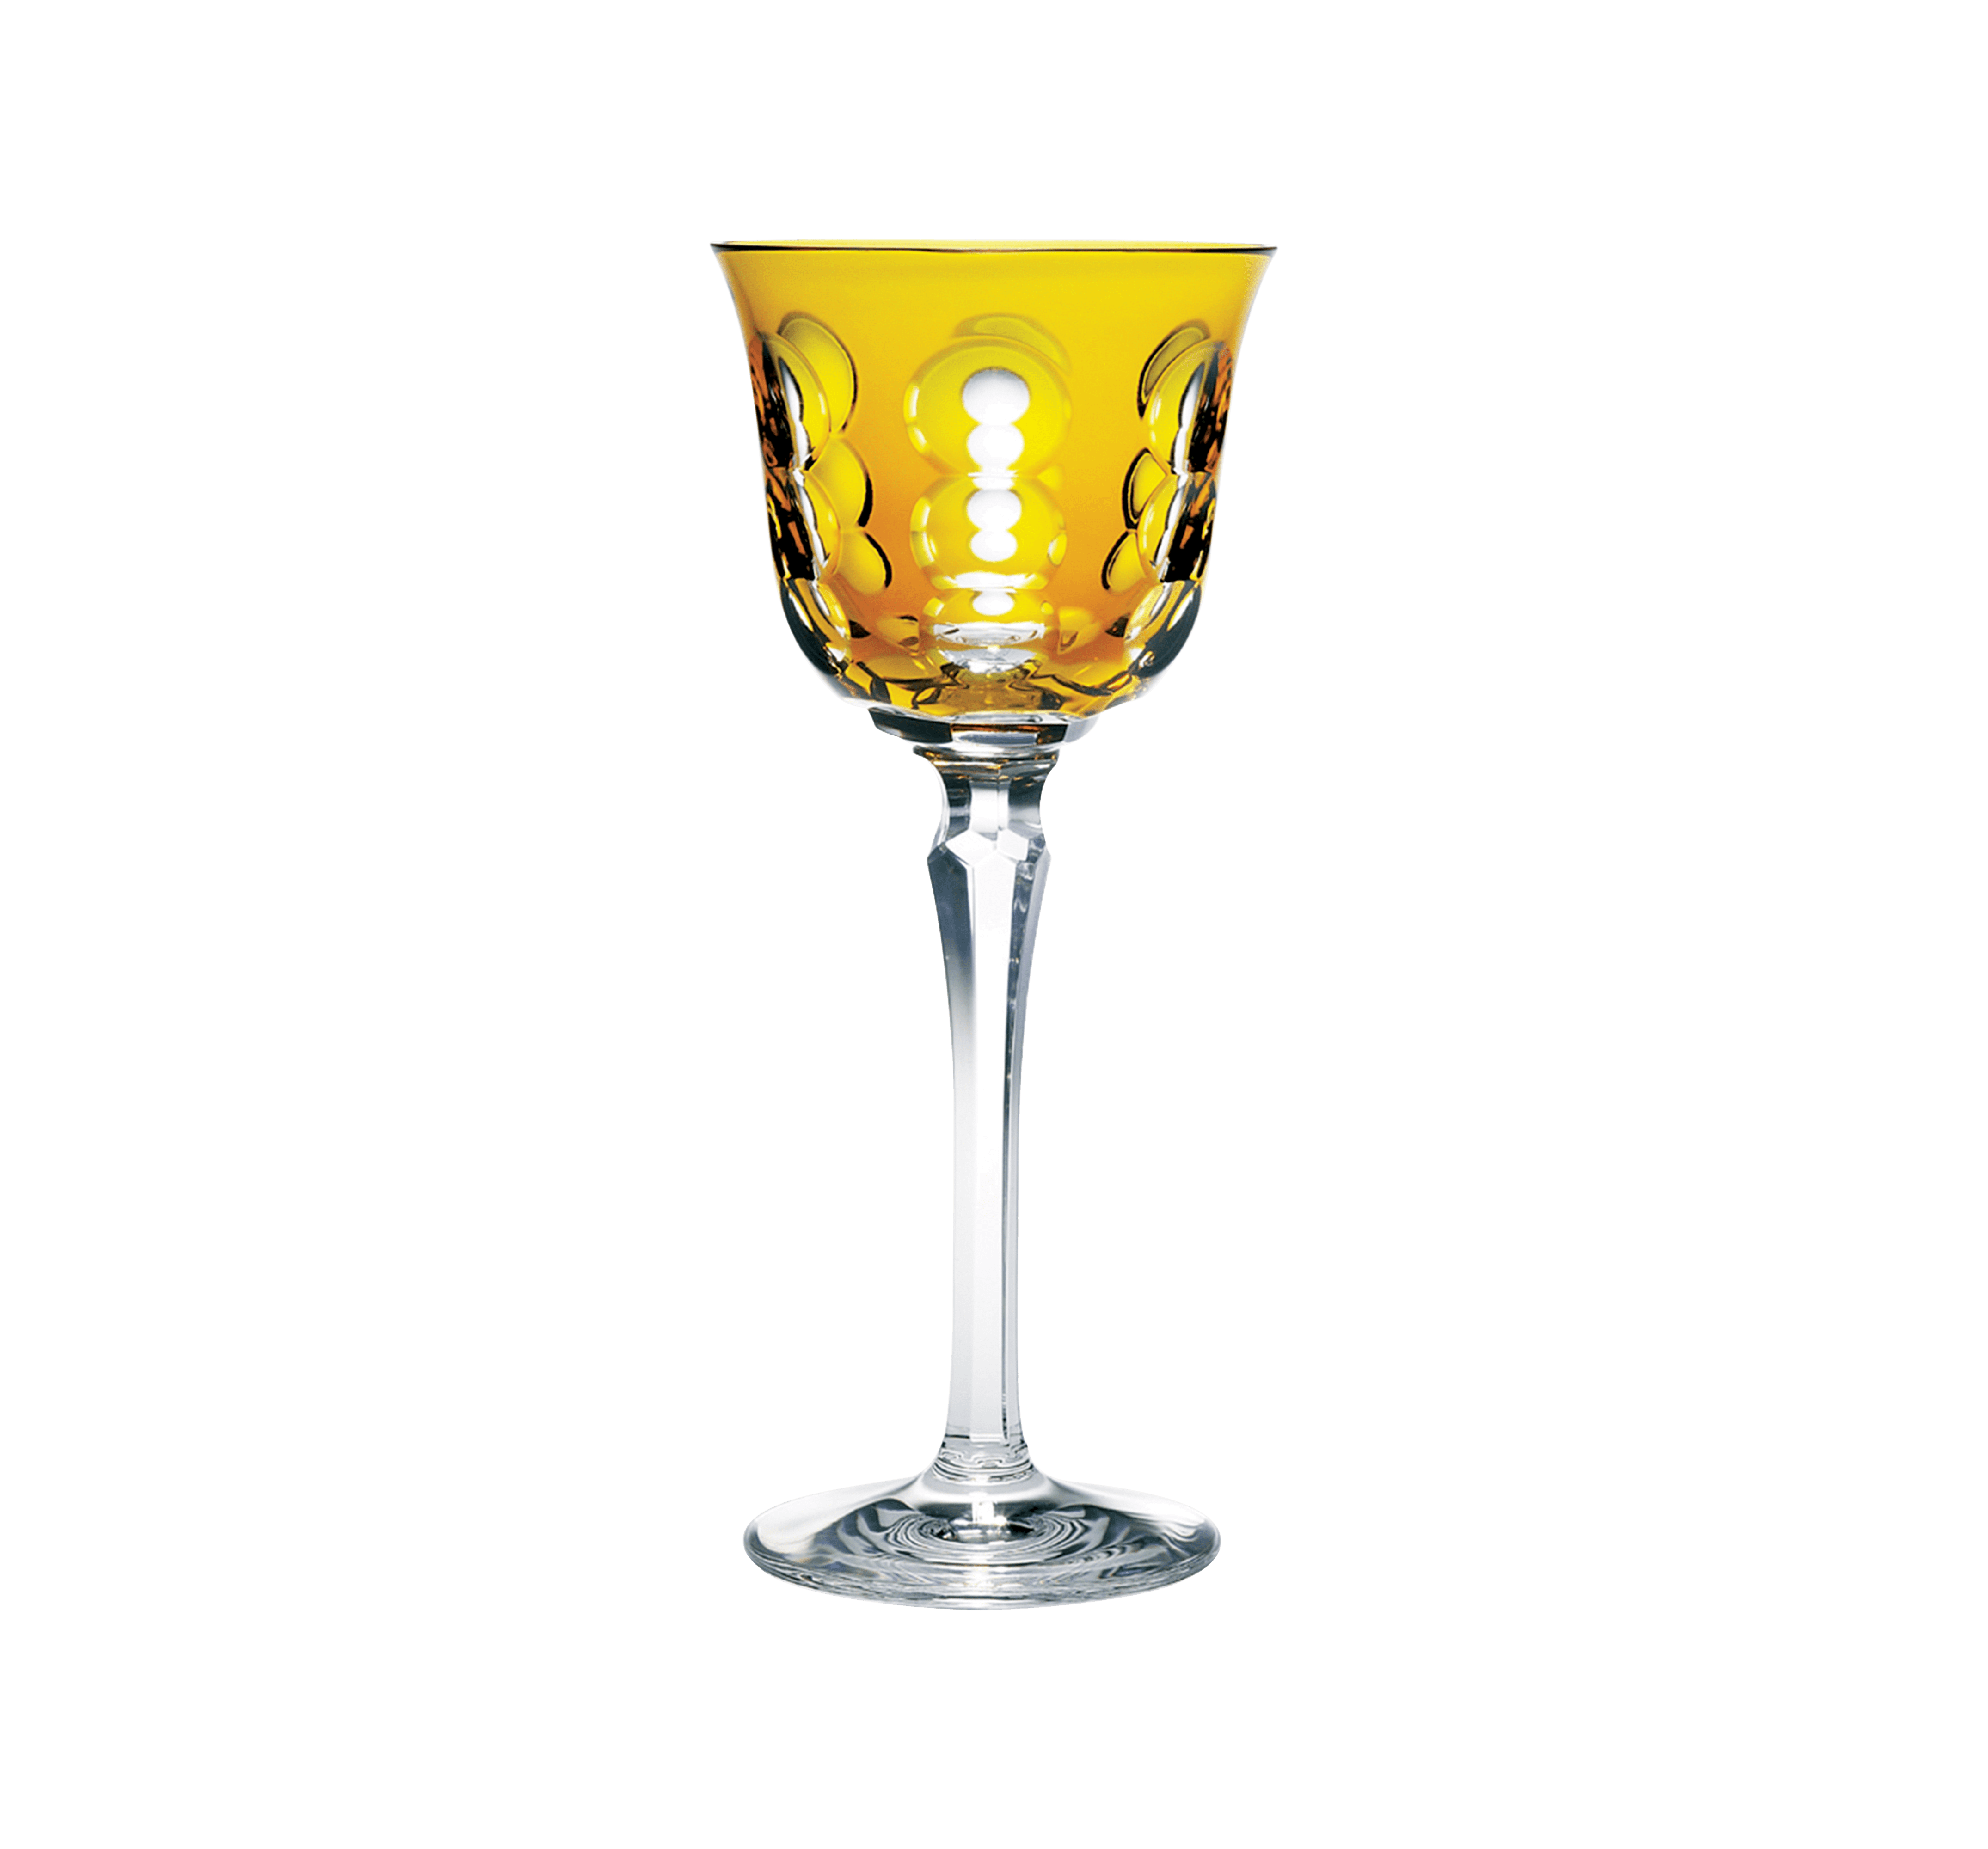 Spirit & Vine - Bulk crystal wine glass charms, Lilly